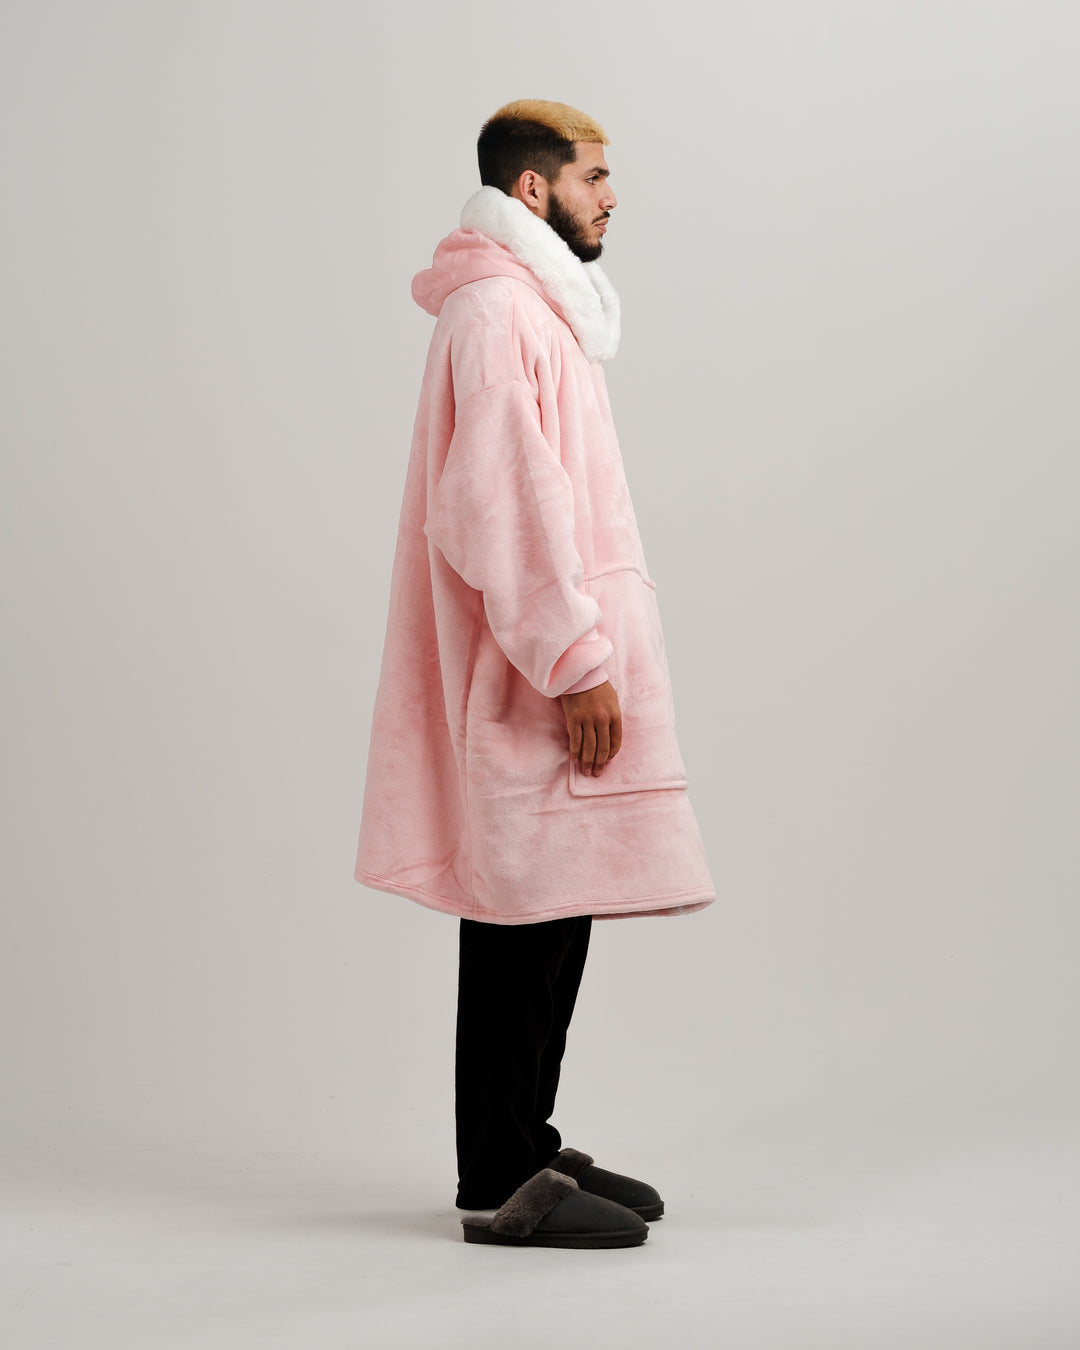 ONY Furlined Hoodie Blanket - Pink - It's Ony